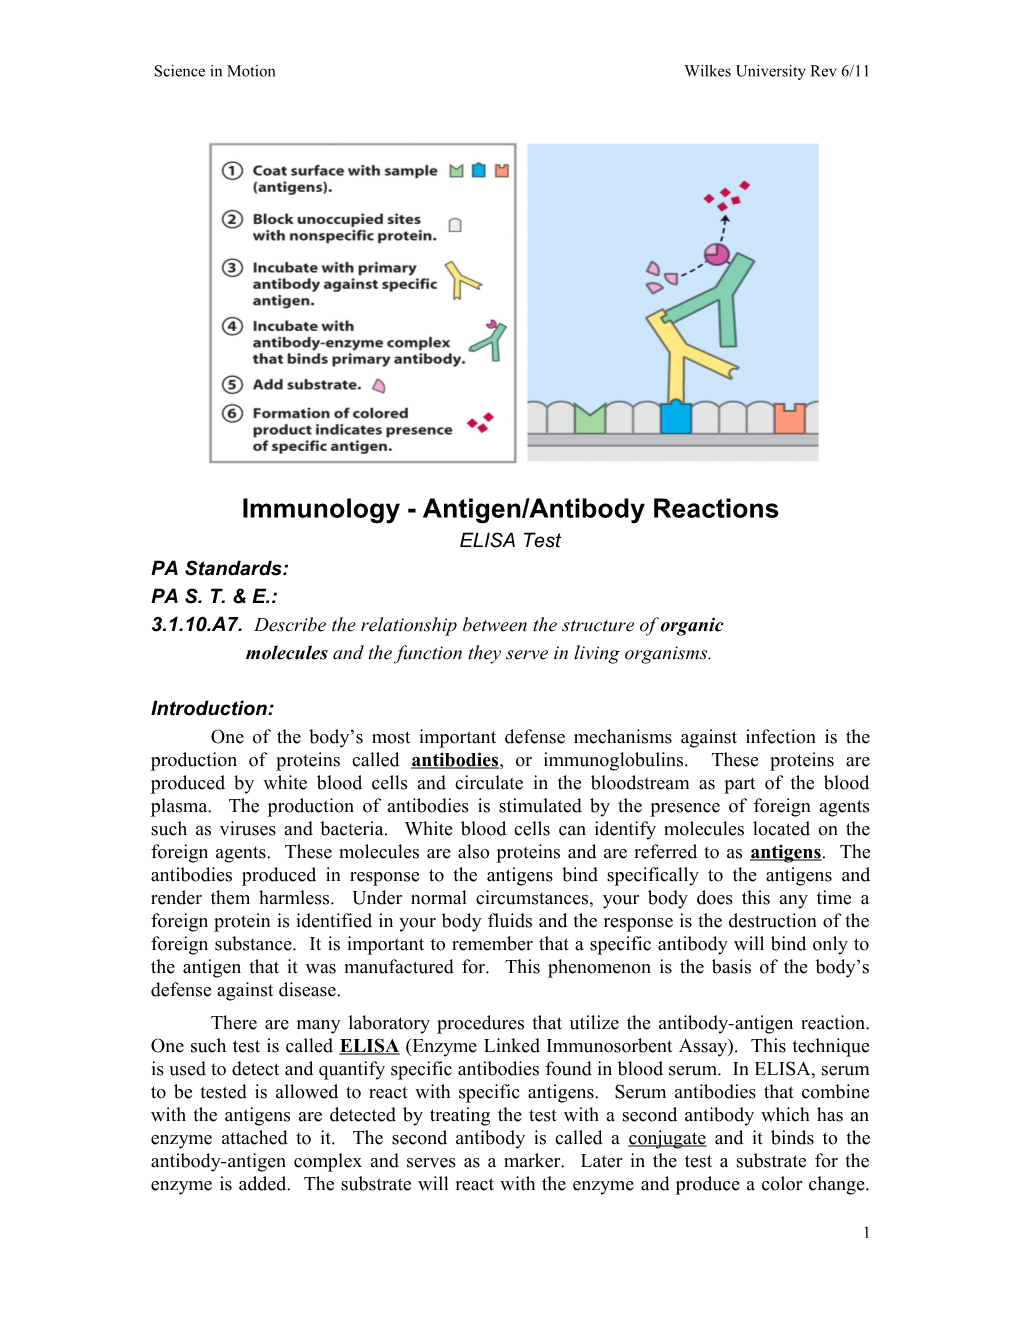 Immunology - Antigen/Antibody Reactions